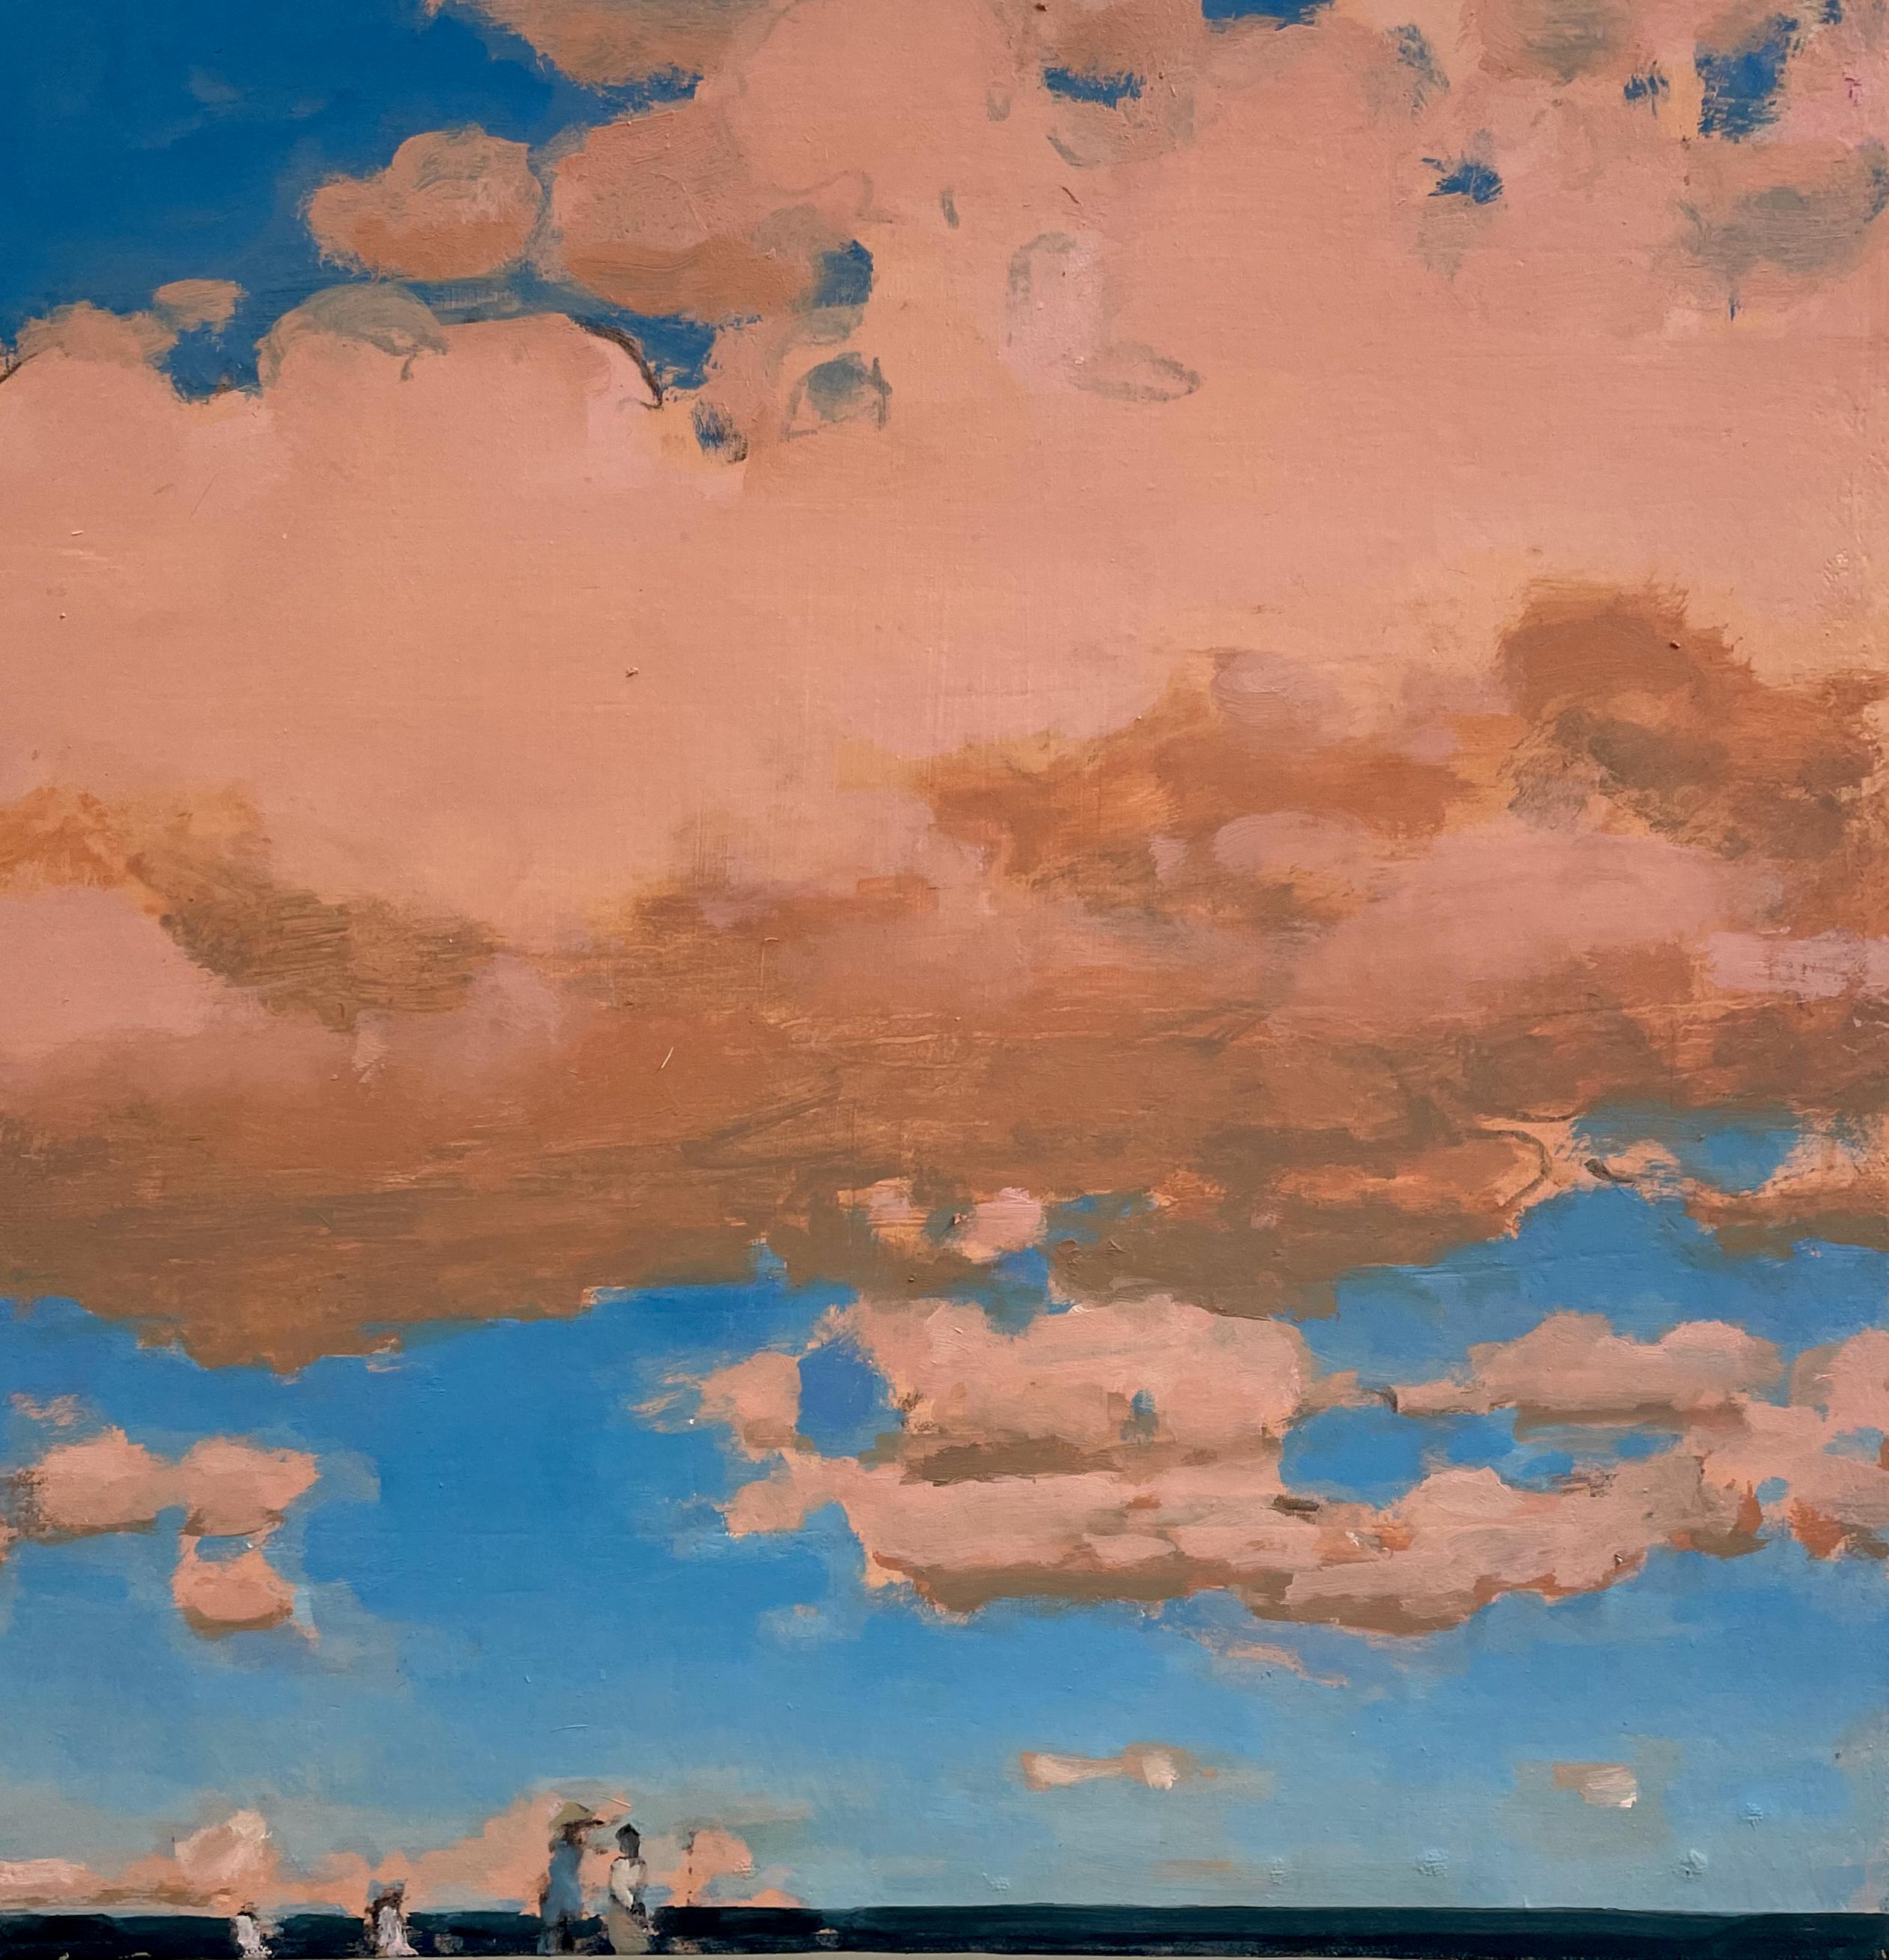 David Konigsberg Figurative Painting - Five, Summer Beach Landscape, Salmon Pink Clouds, Blue Sky, Navy Ocean, Figures